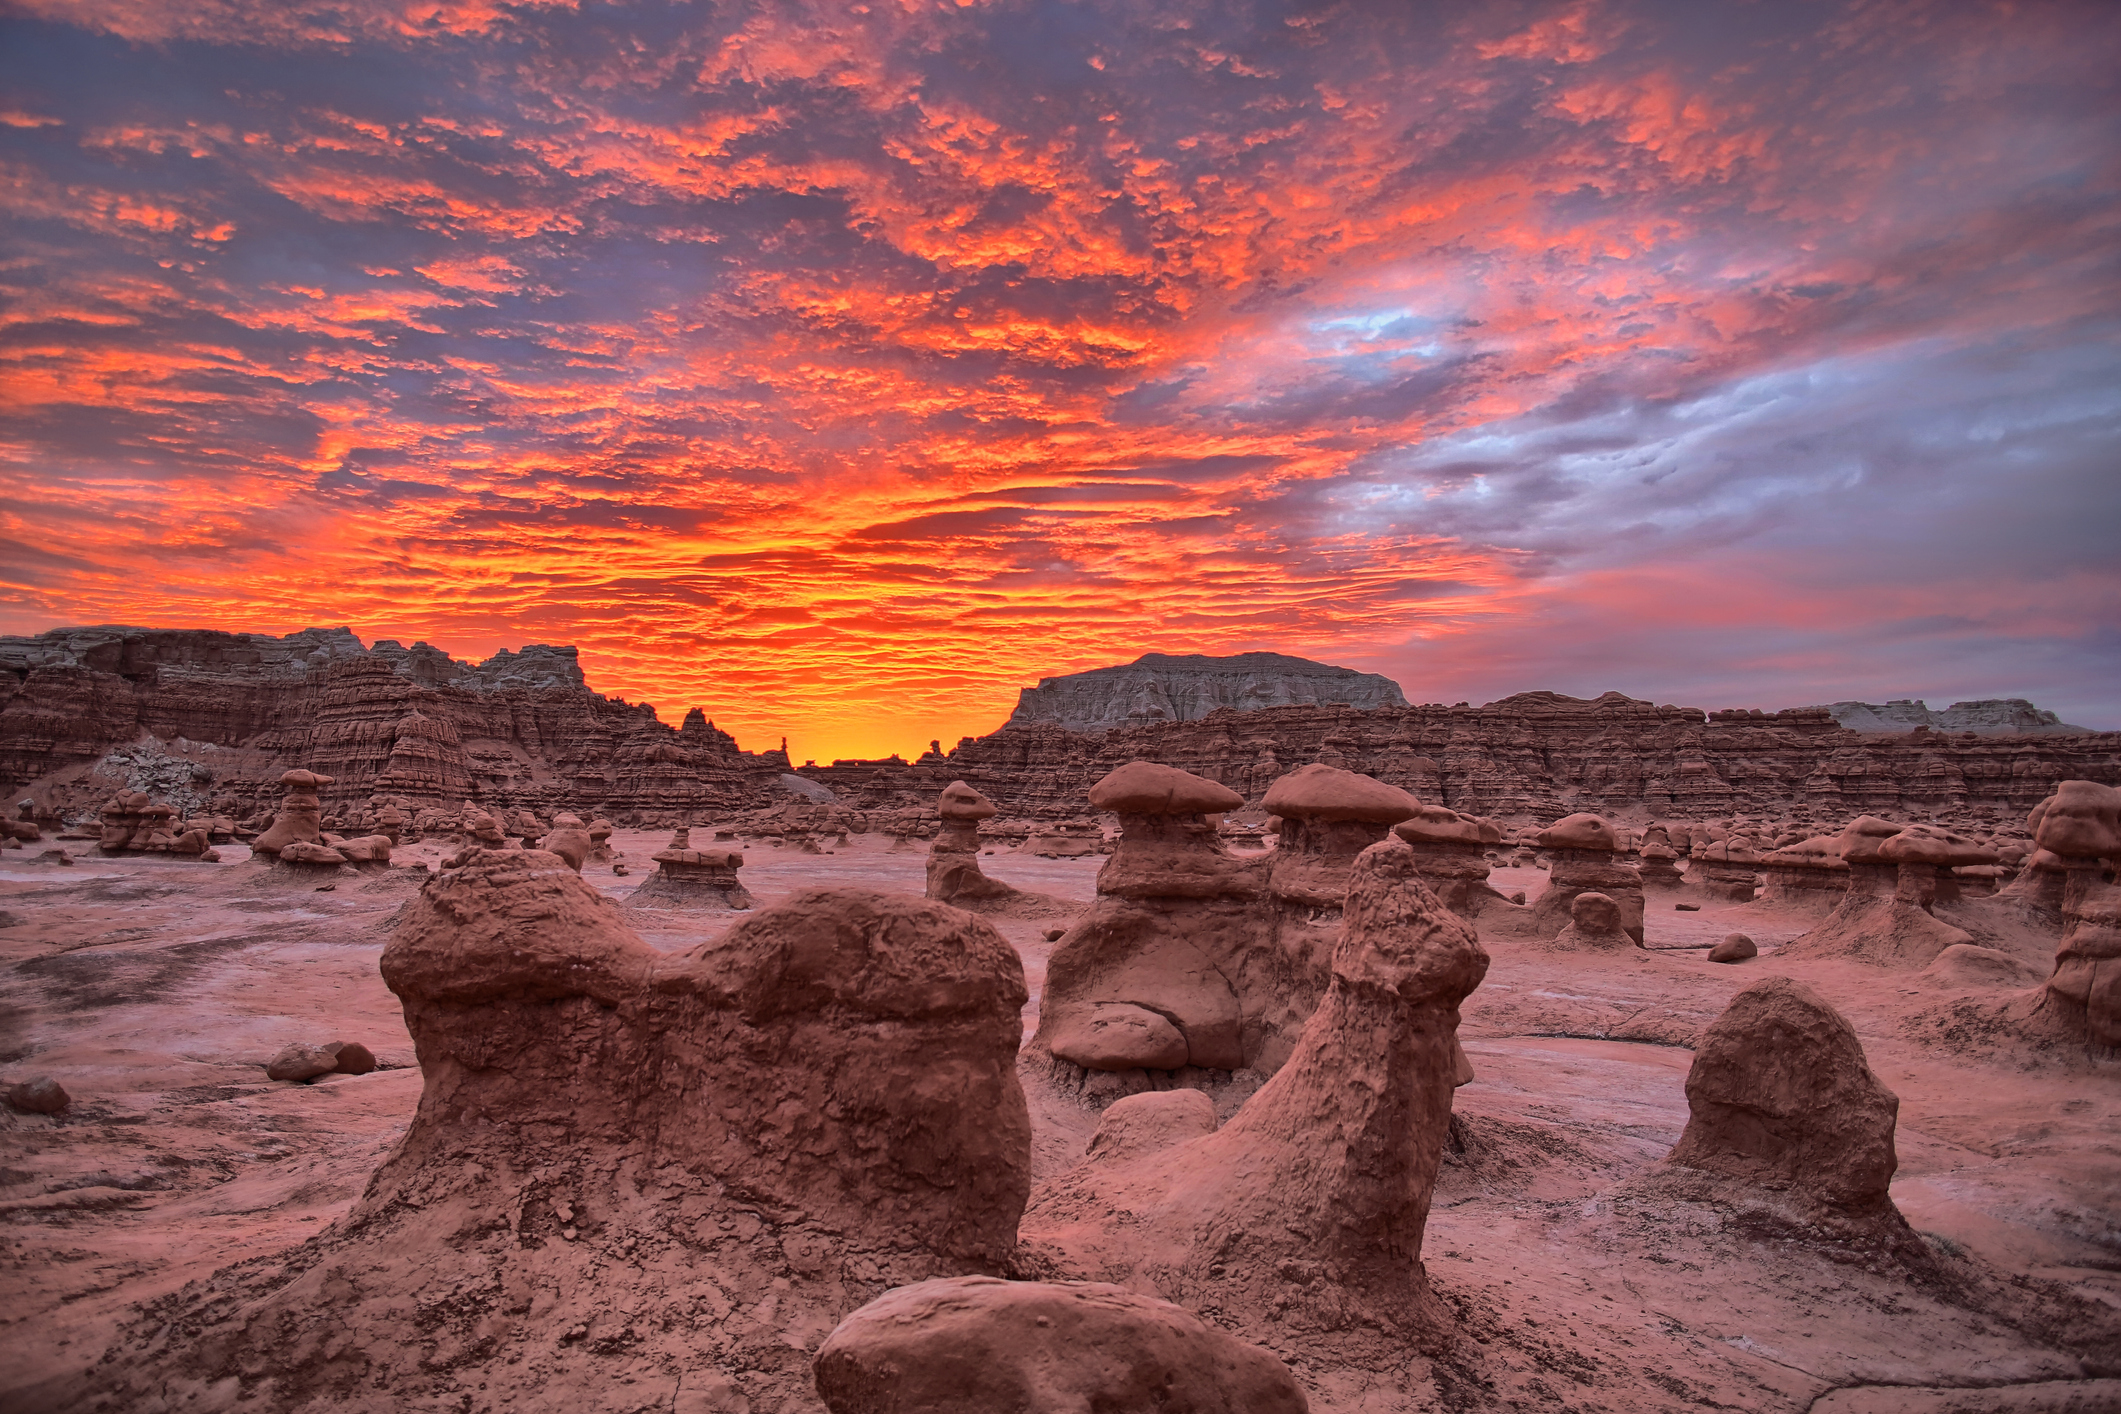 Surreal rocks across a desert floor.